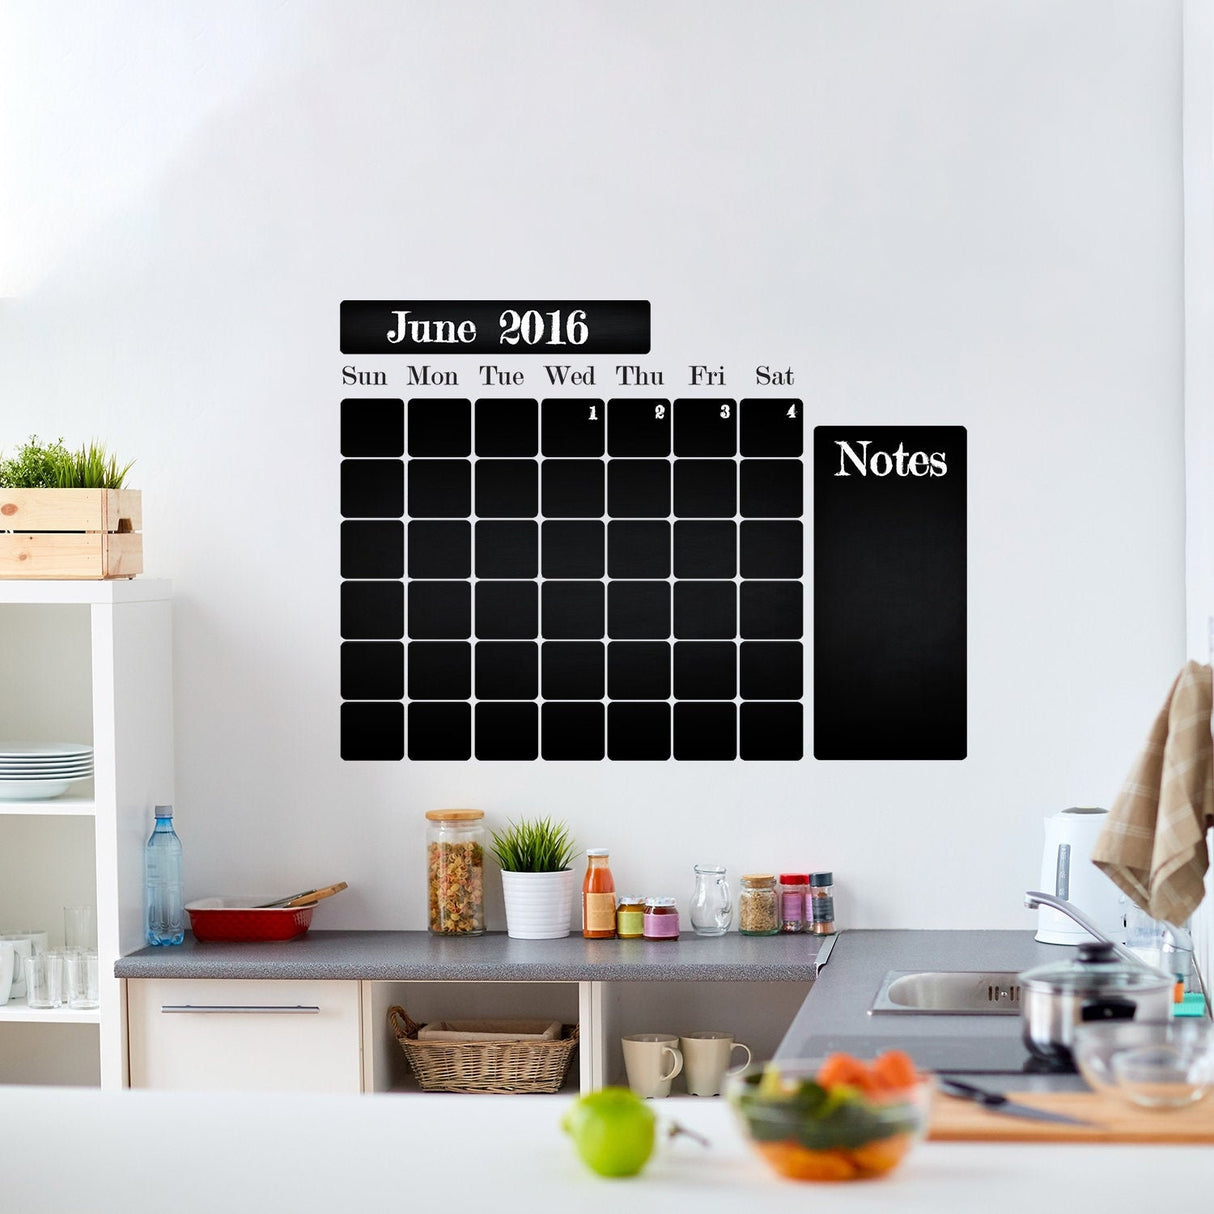 Chalkboard Wall Planner Blackboard Kitchen Sticker - Black Board Weekly Calendar Chalk Decal Monthly Week Day Meal Memo Menu Daily Organiser